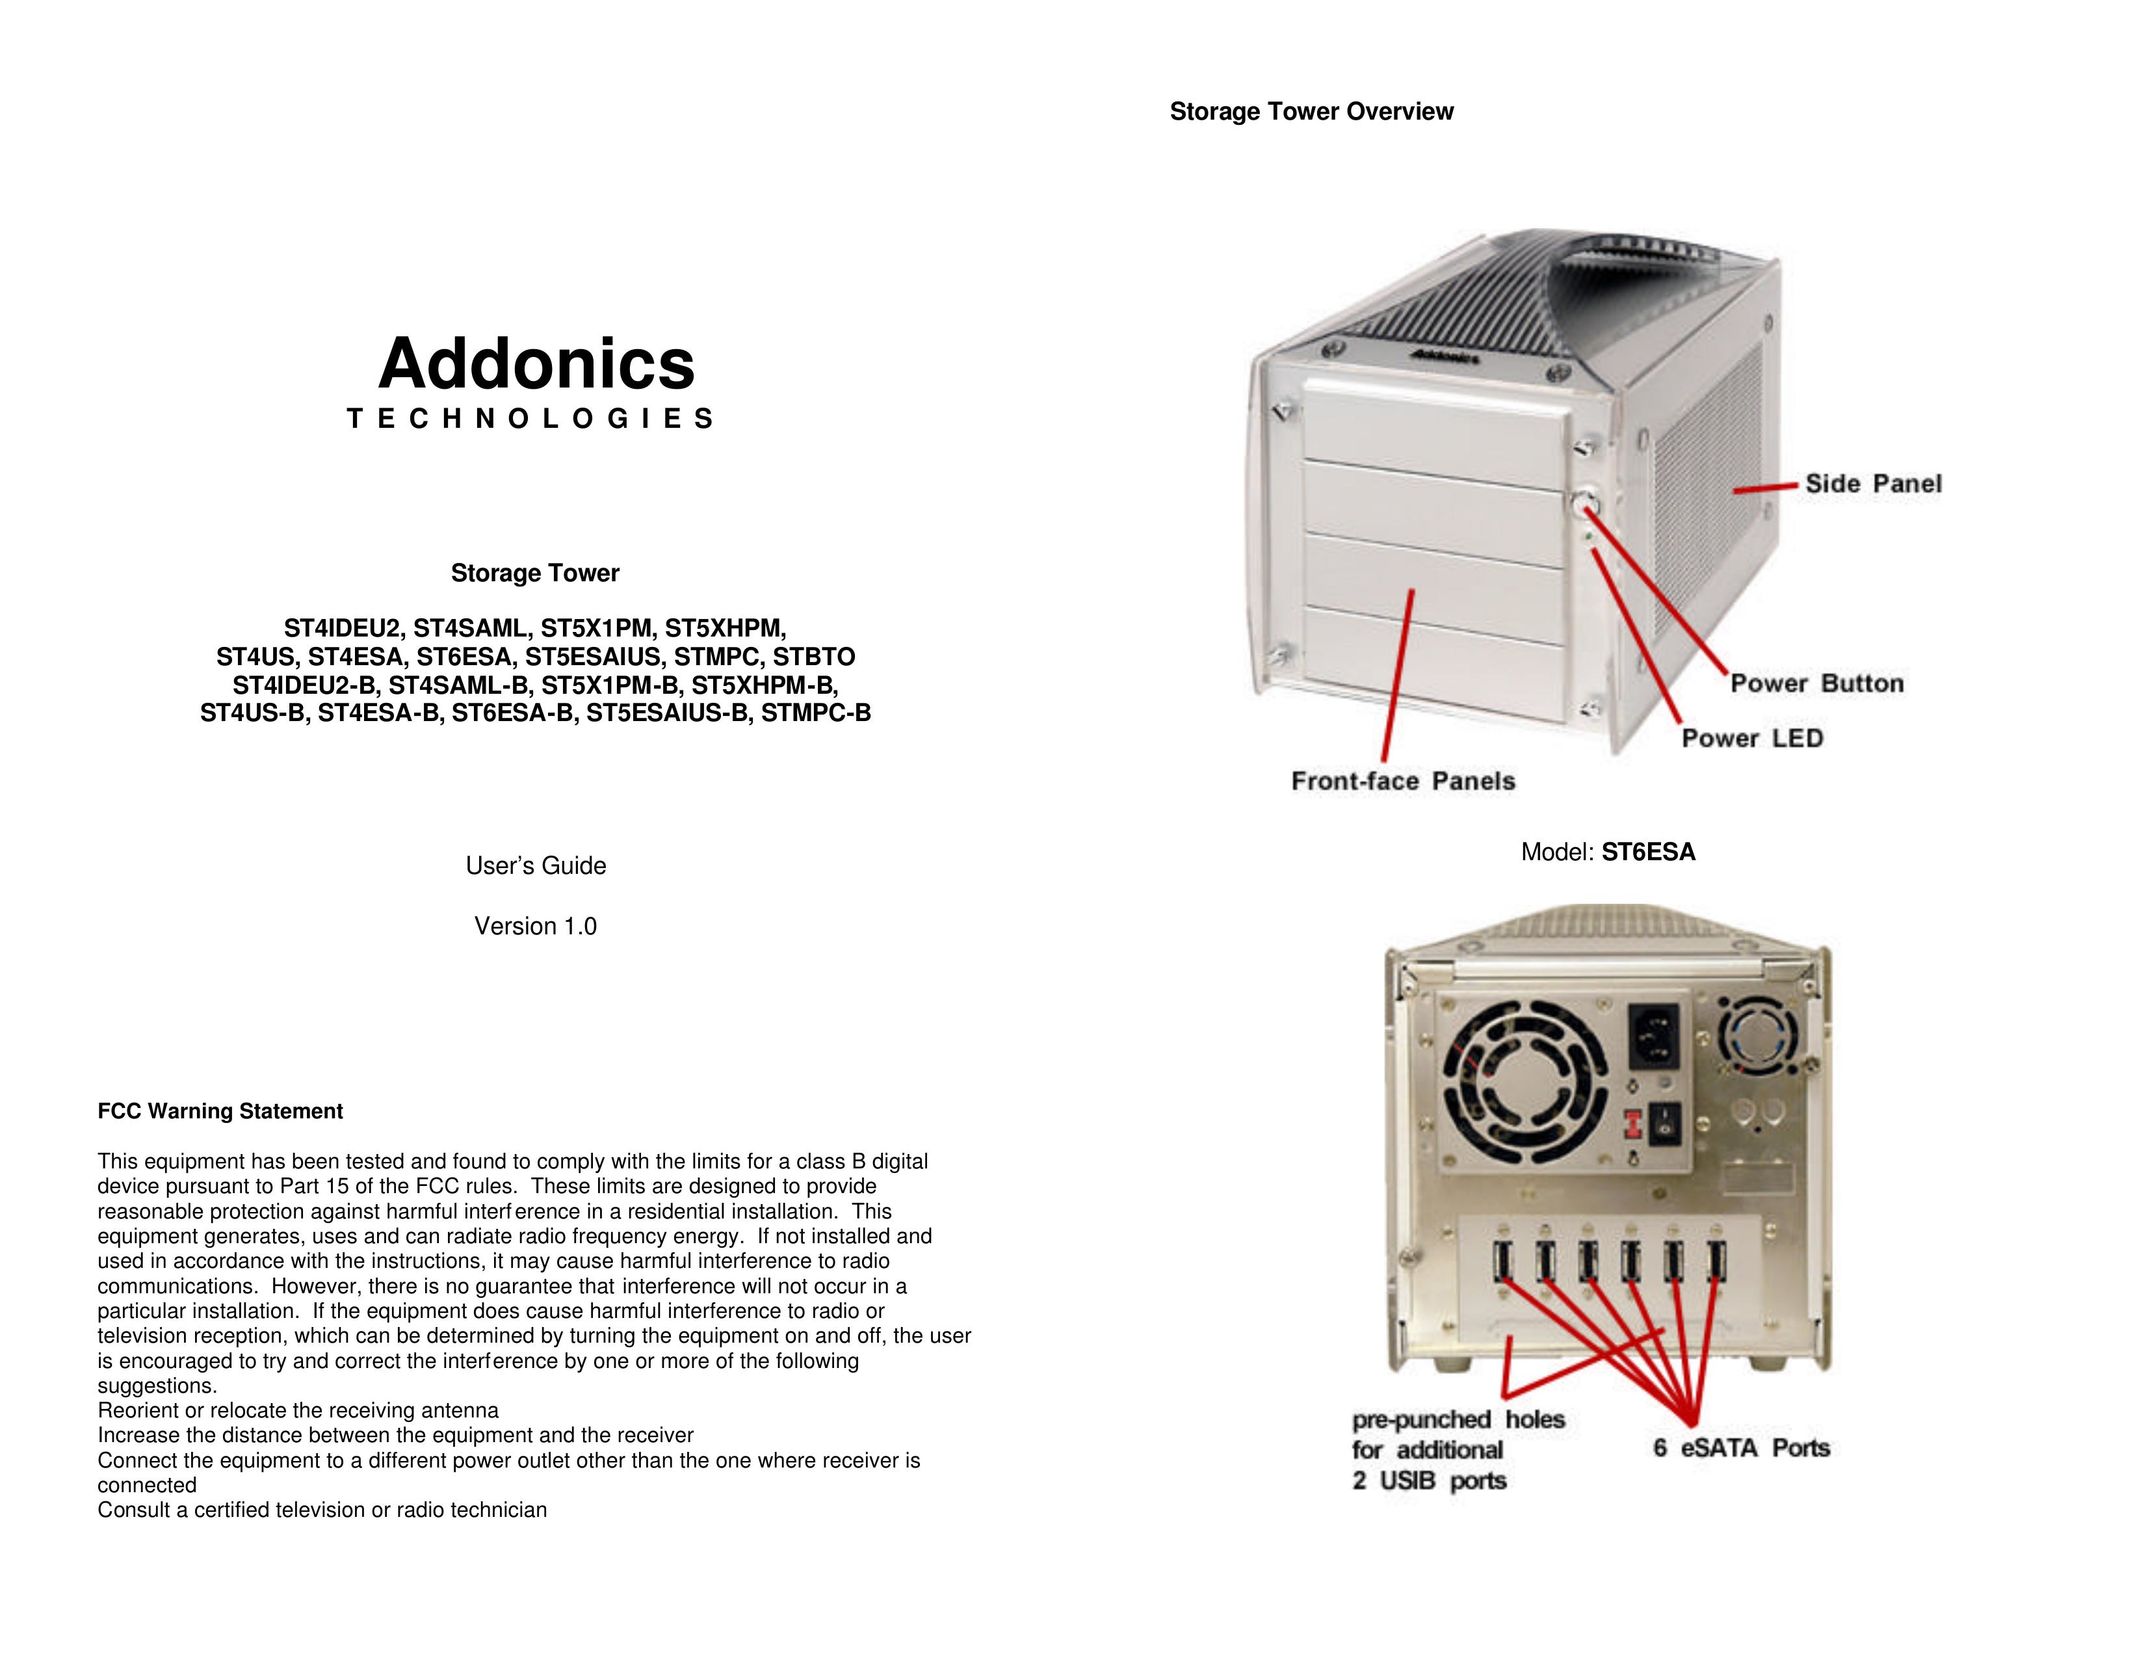 Addonics Technologies ST5XHPM Portable Media Storage User Manual